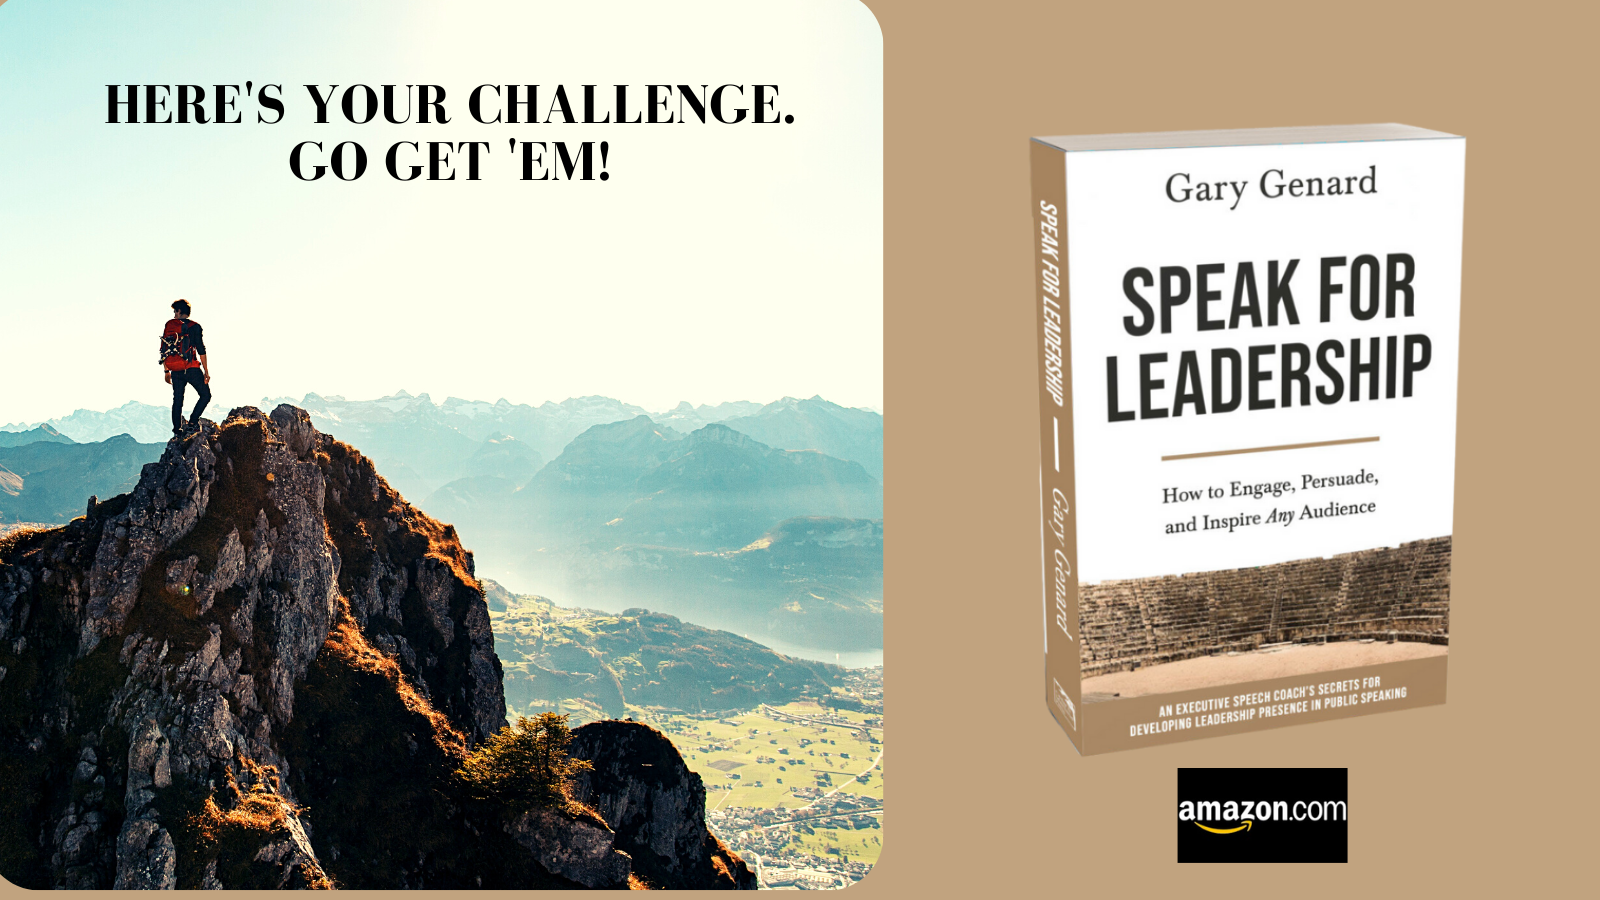 Dr. Gary Genard's book on leadership presence, Speak for Leadership.